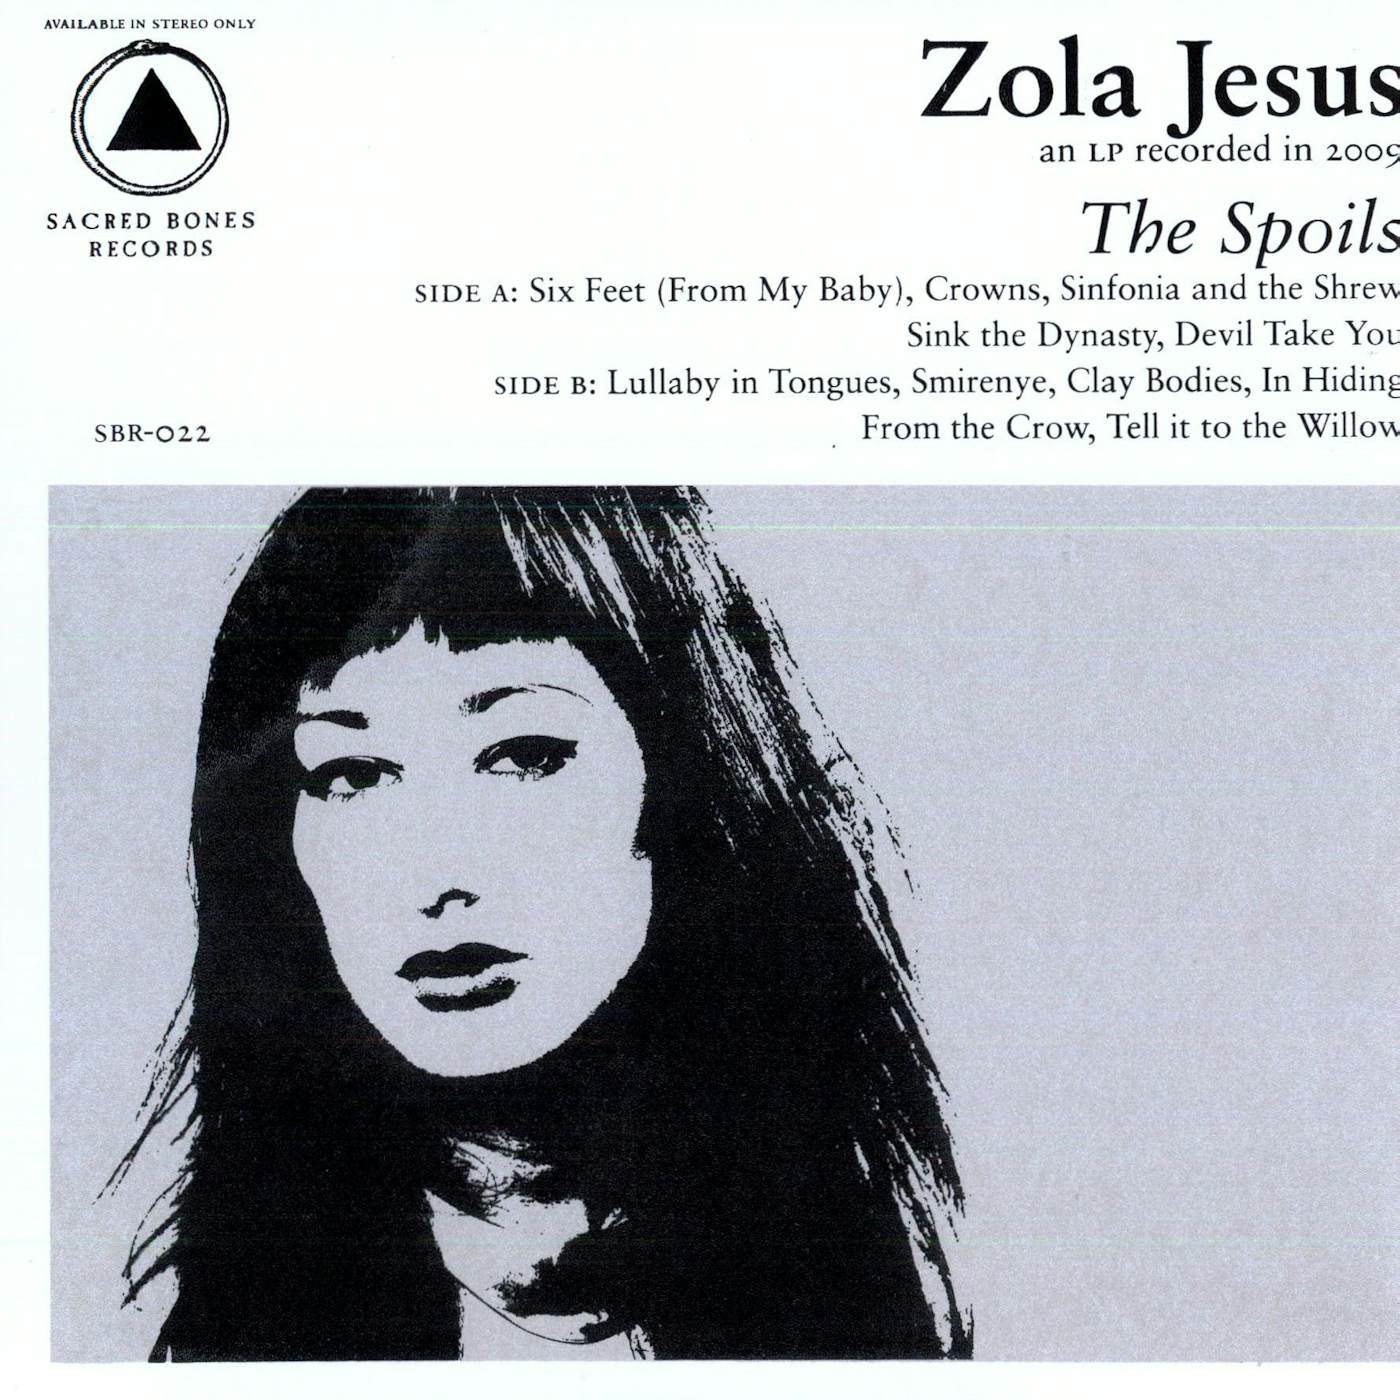 Zola Jesus SPOILS Vinyl Record